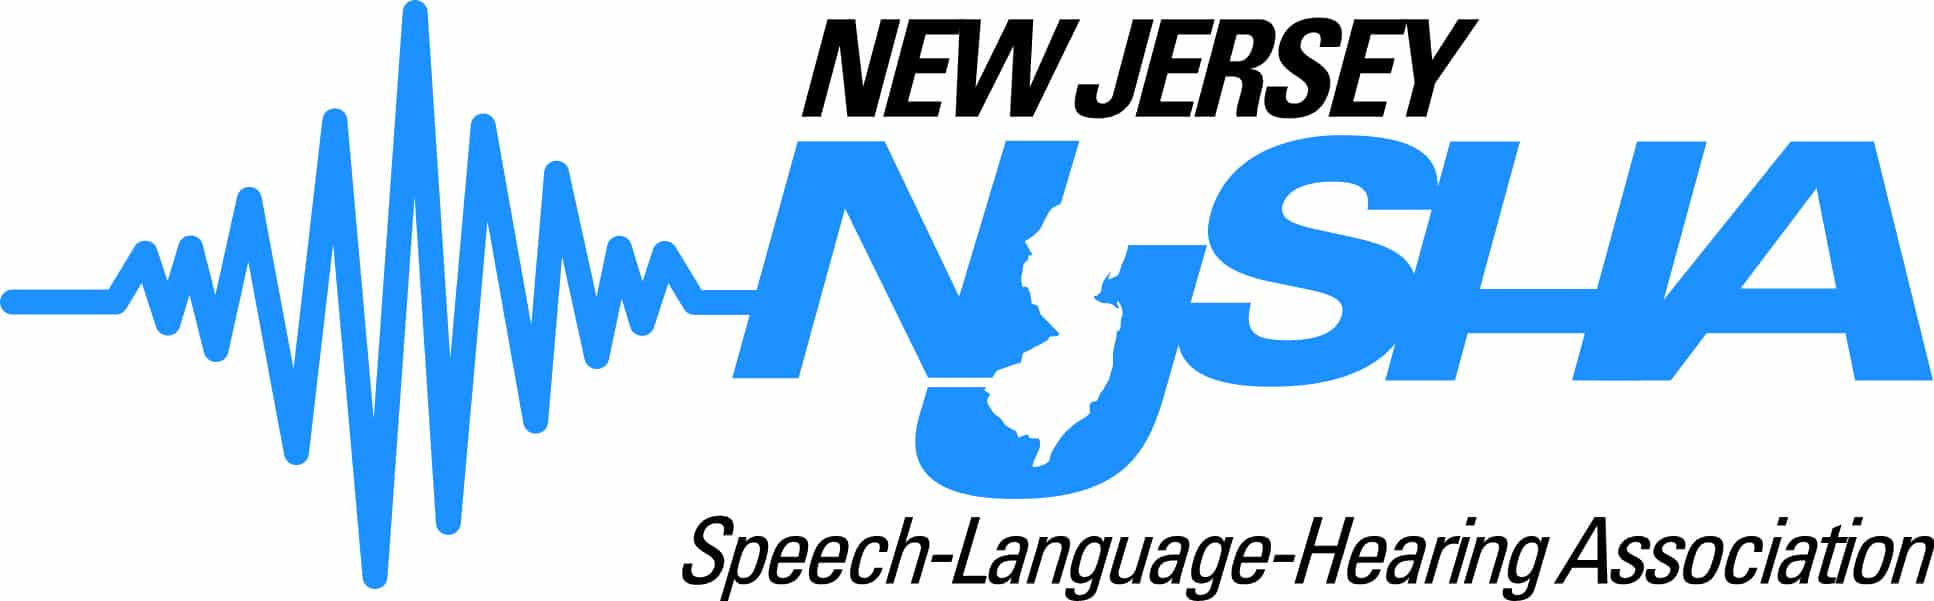 New Jersey Speech-Language-Hearing Association